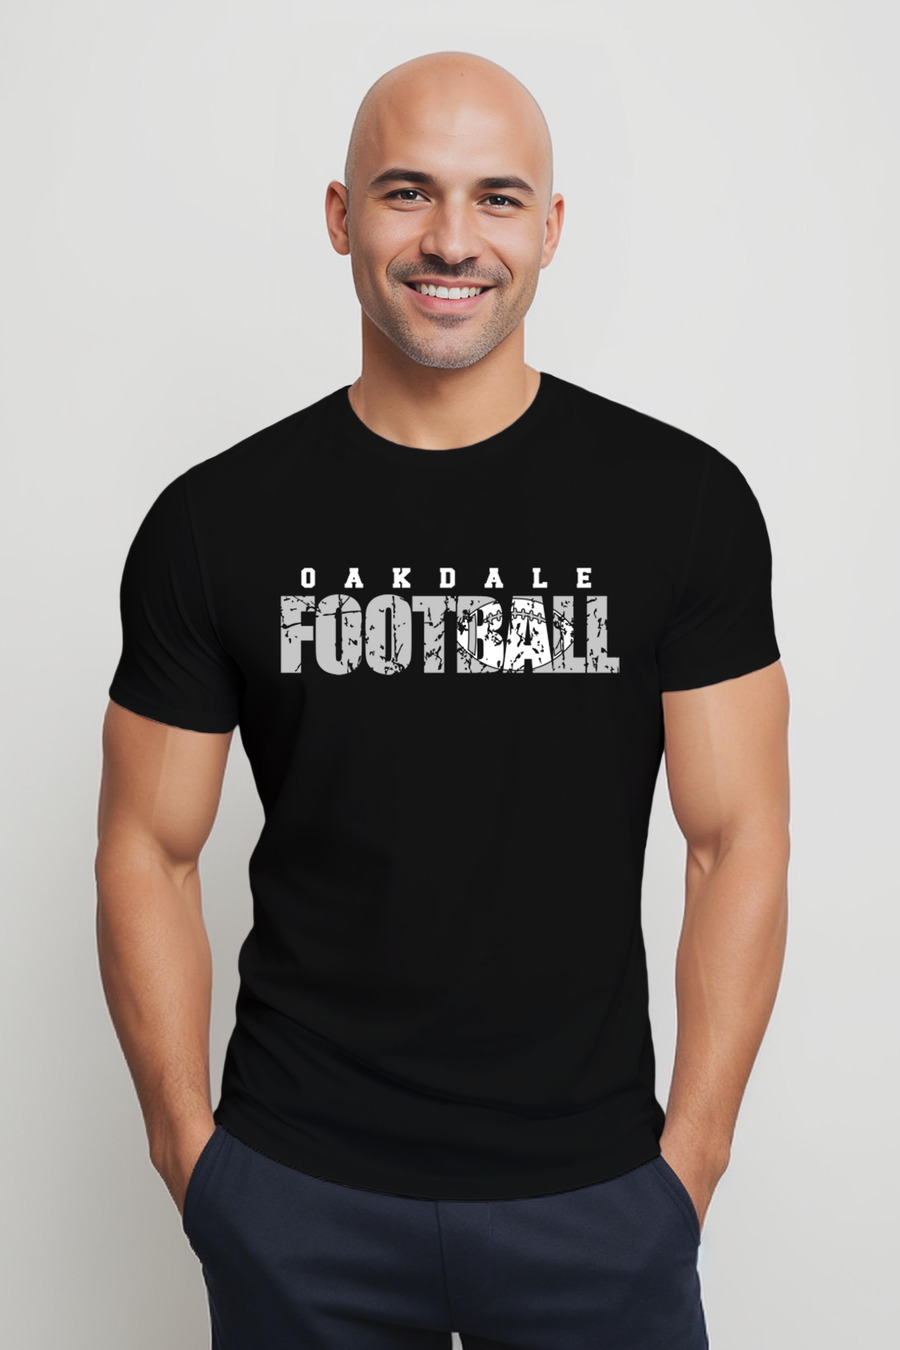 Oakdale Football- Distressed Design- Black Shirt (OHS)